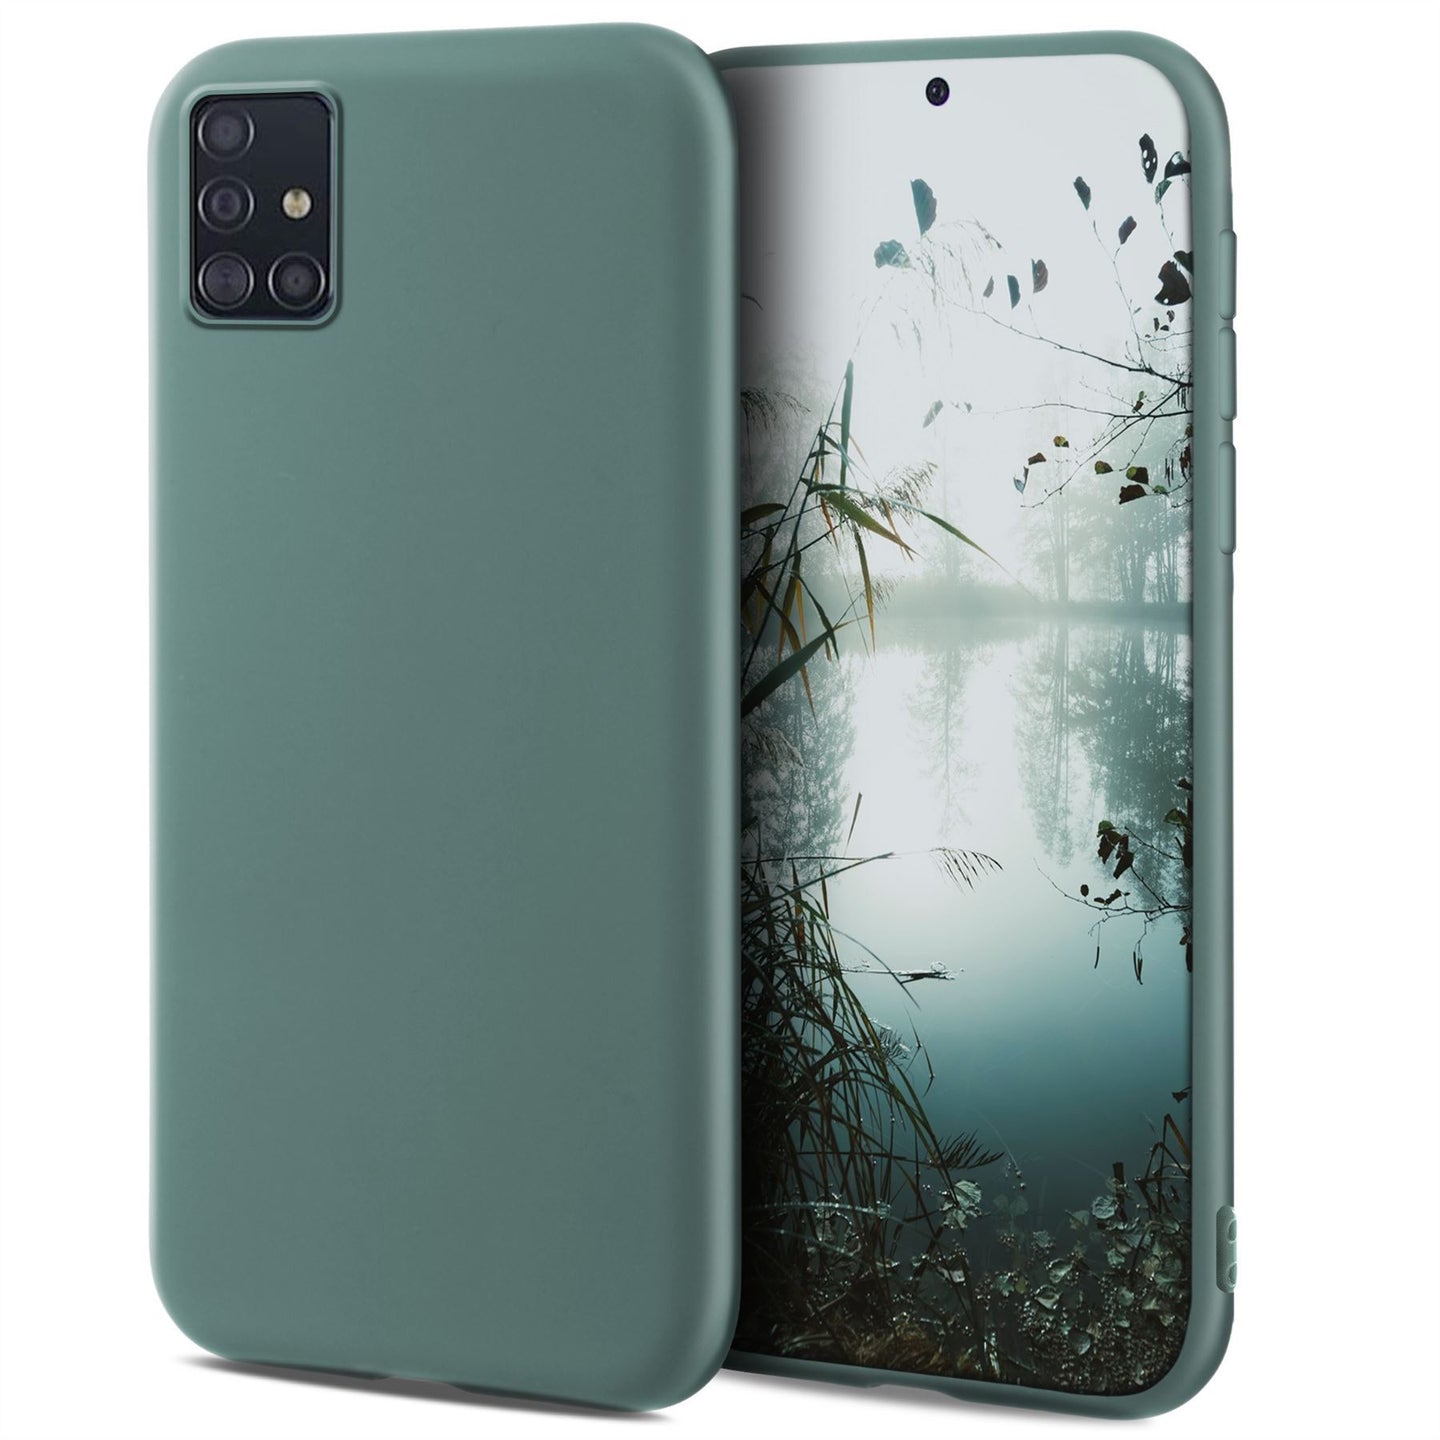 Moozy Minimalist Series Silicone Case for Samsung A51, Blue Grey - Matte Finish Slim Soft TPU Cover